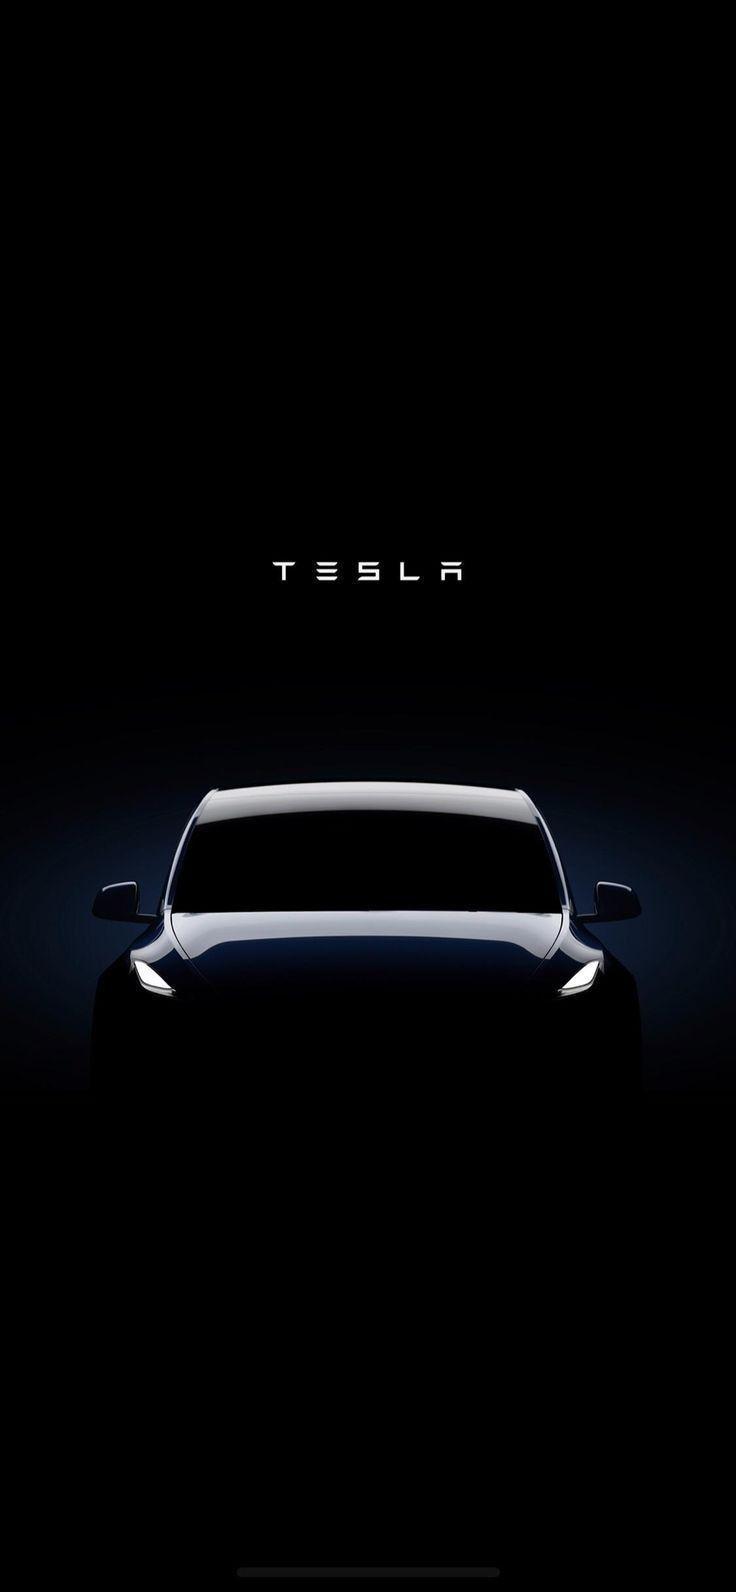 Tesla Wallpaper Car Roadster